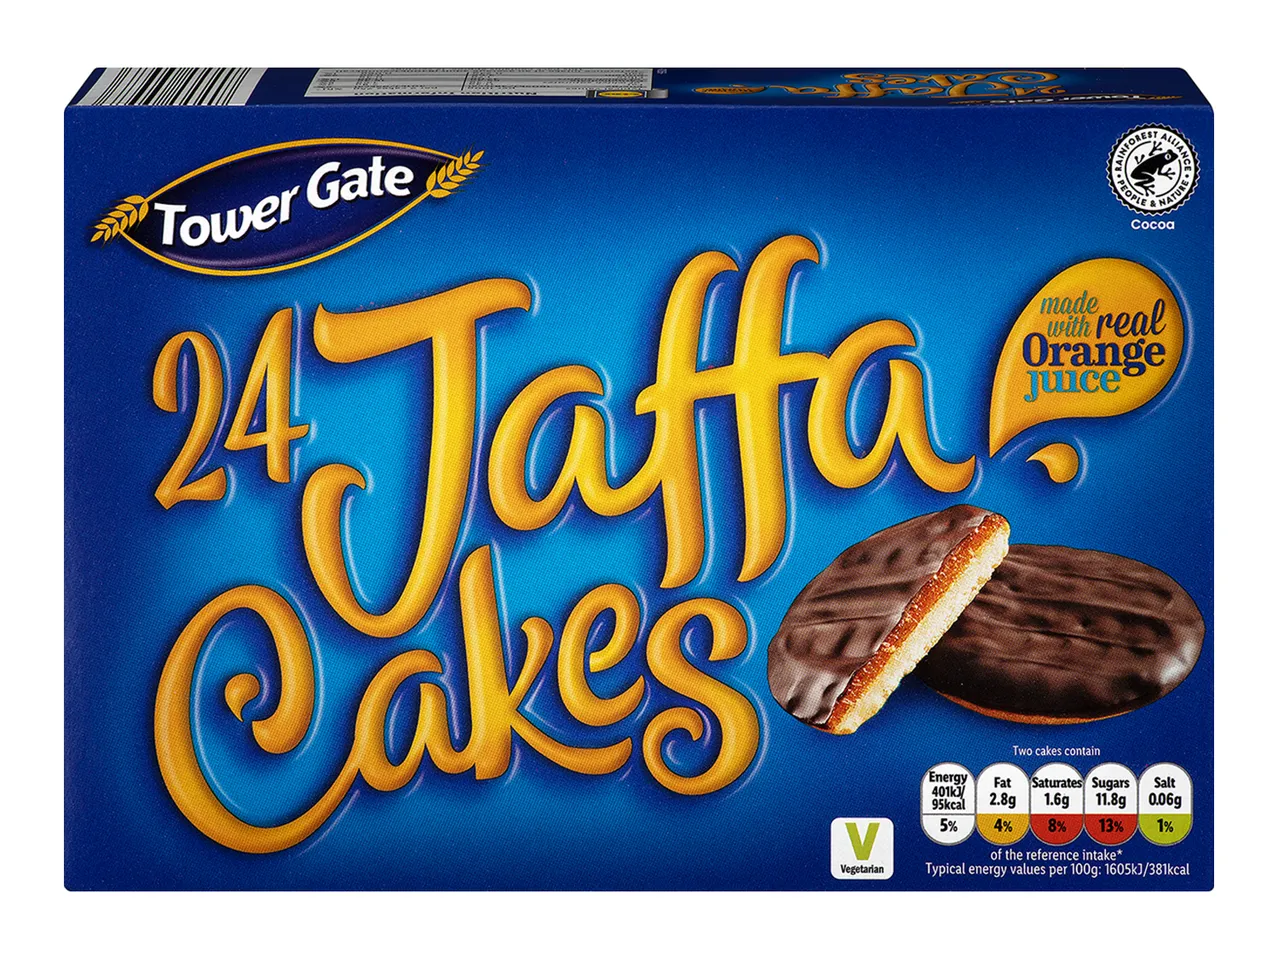 Go to full screen view: Tower Gate Orange Jaffa Cakes - Image 1